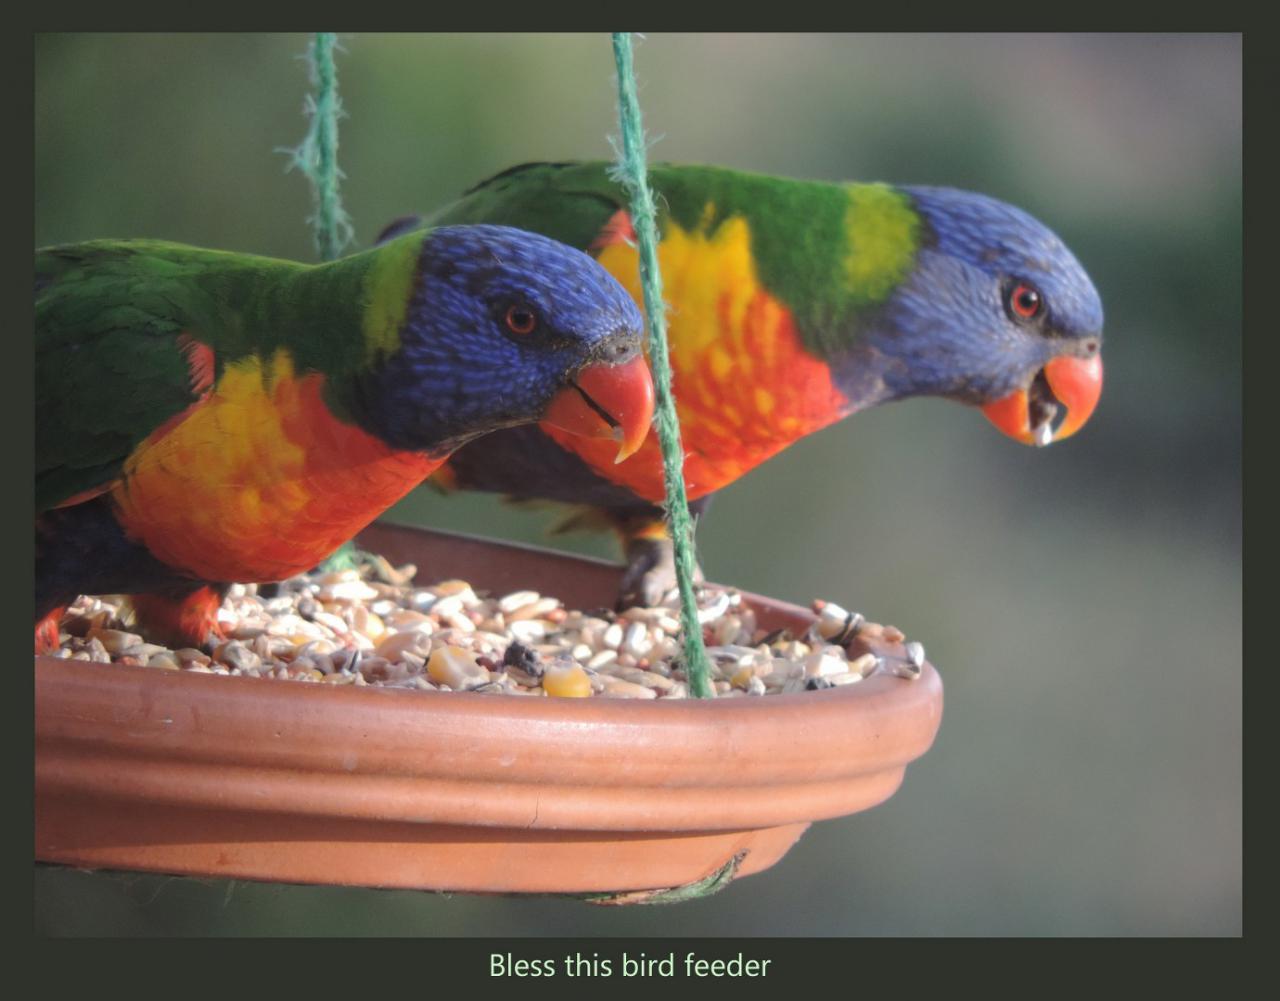 Bless this bird feeder